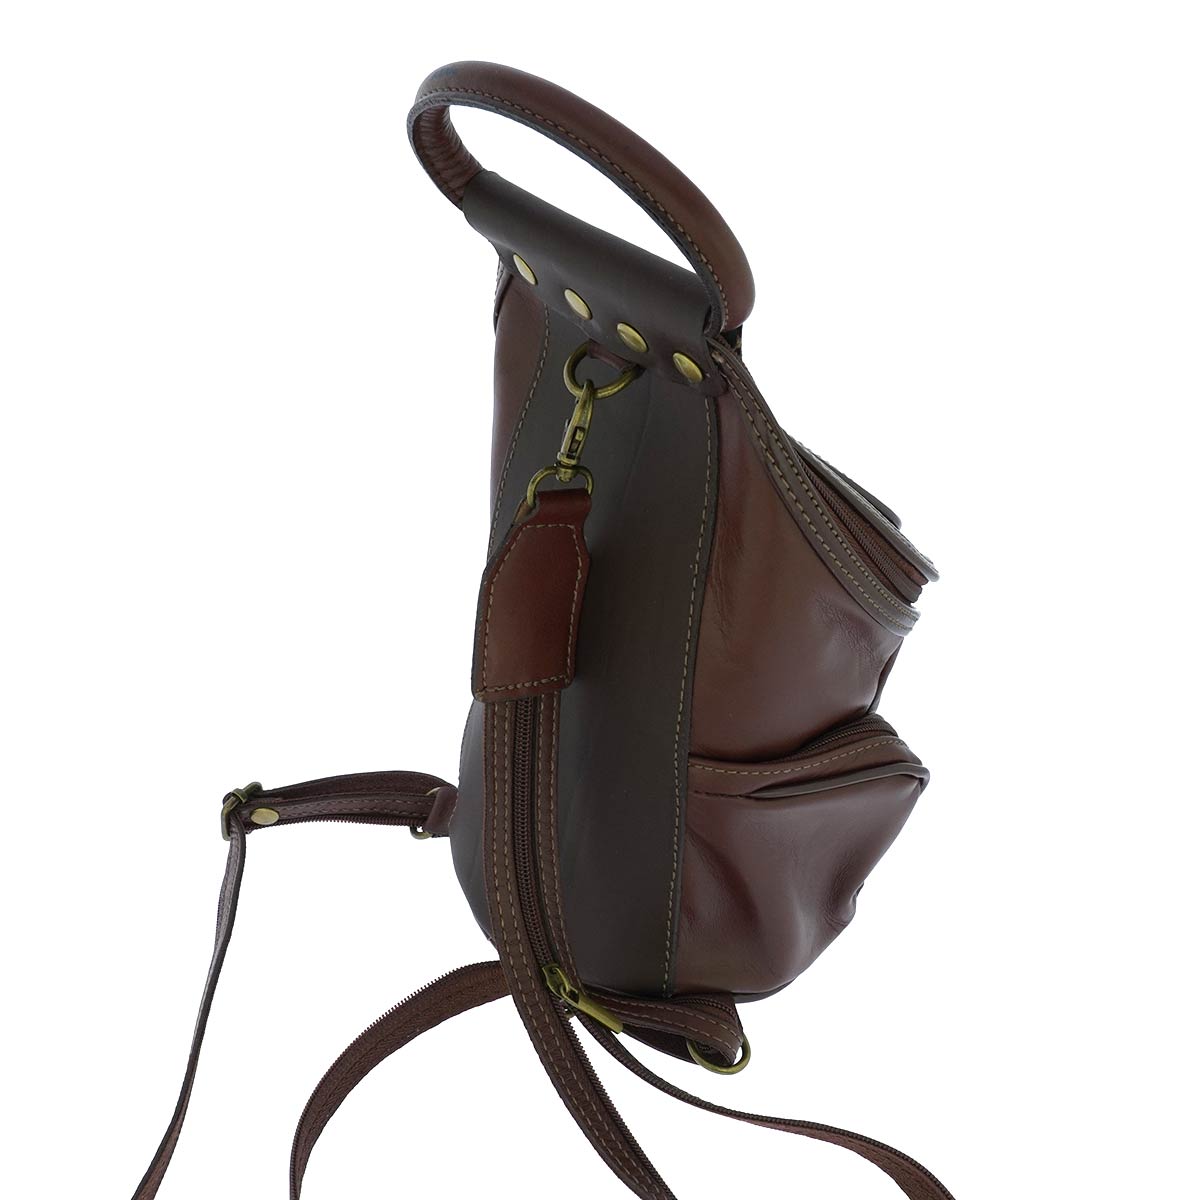 Fioretta Italian Genuine Leather Top Handle Backpack Handbag Shoulder Bag For Women - Brown